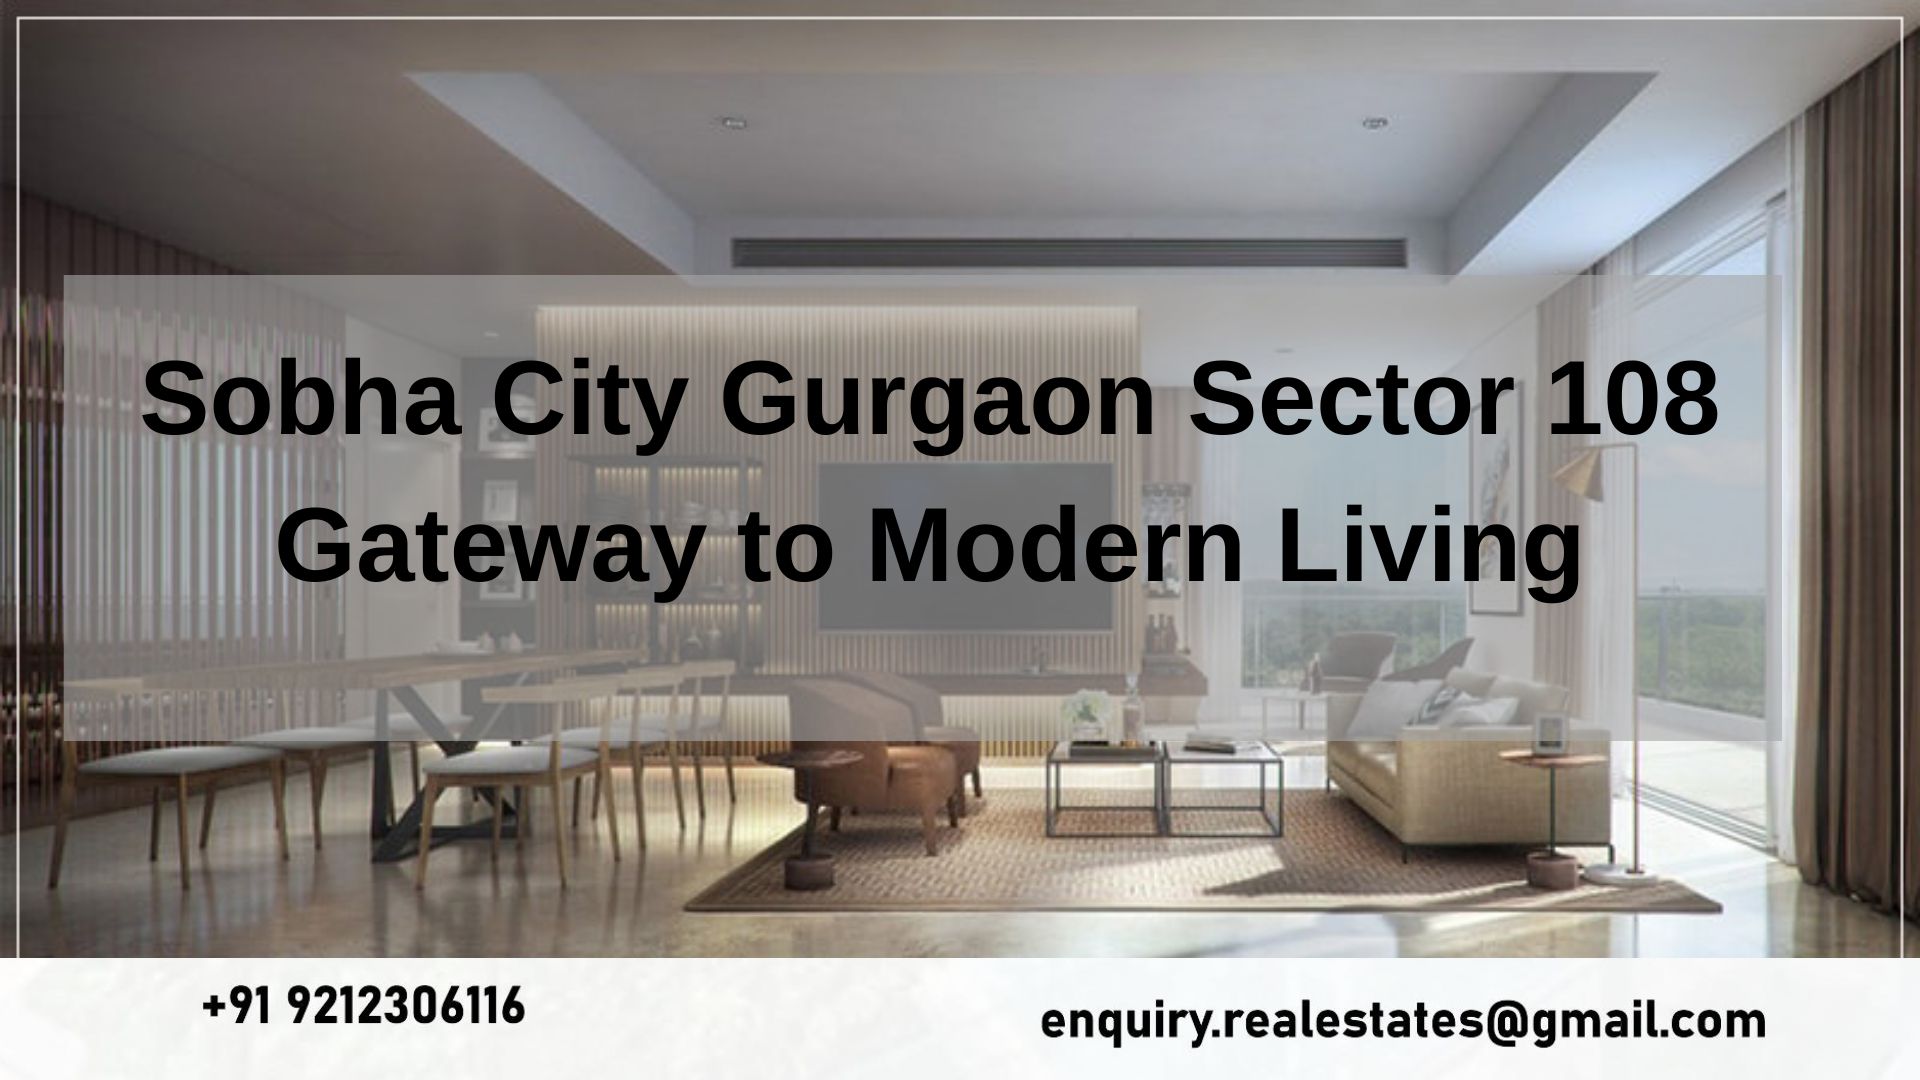 Sobha City Gurgaon Sector 108 Gateway to Modern Living